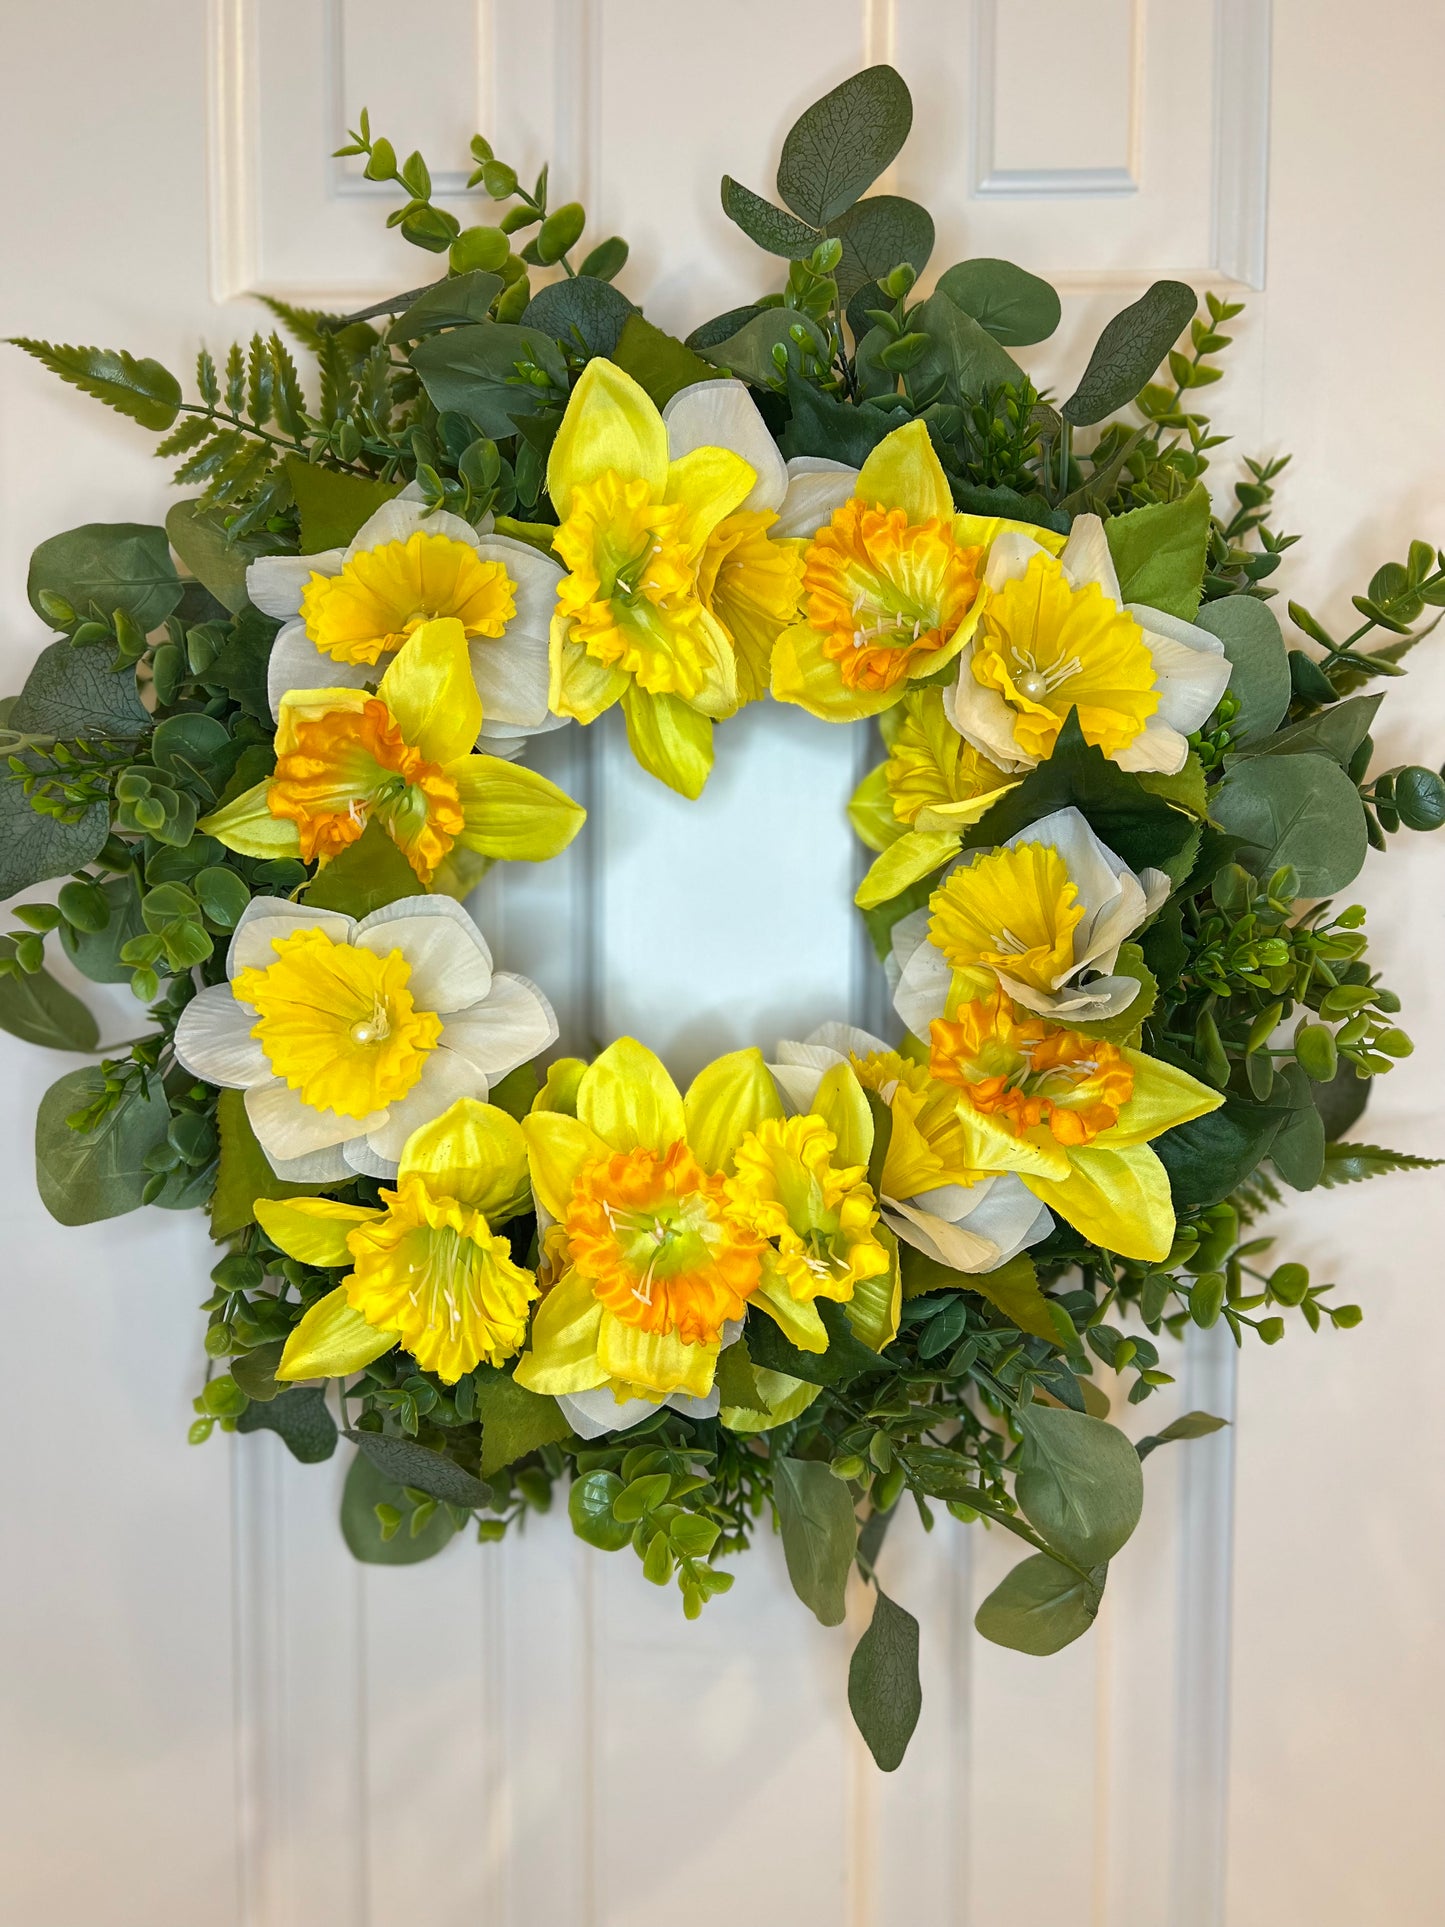 16" Daffodils and Eucalyptus Wreath